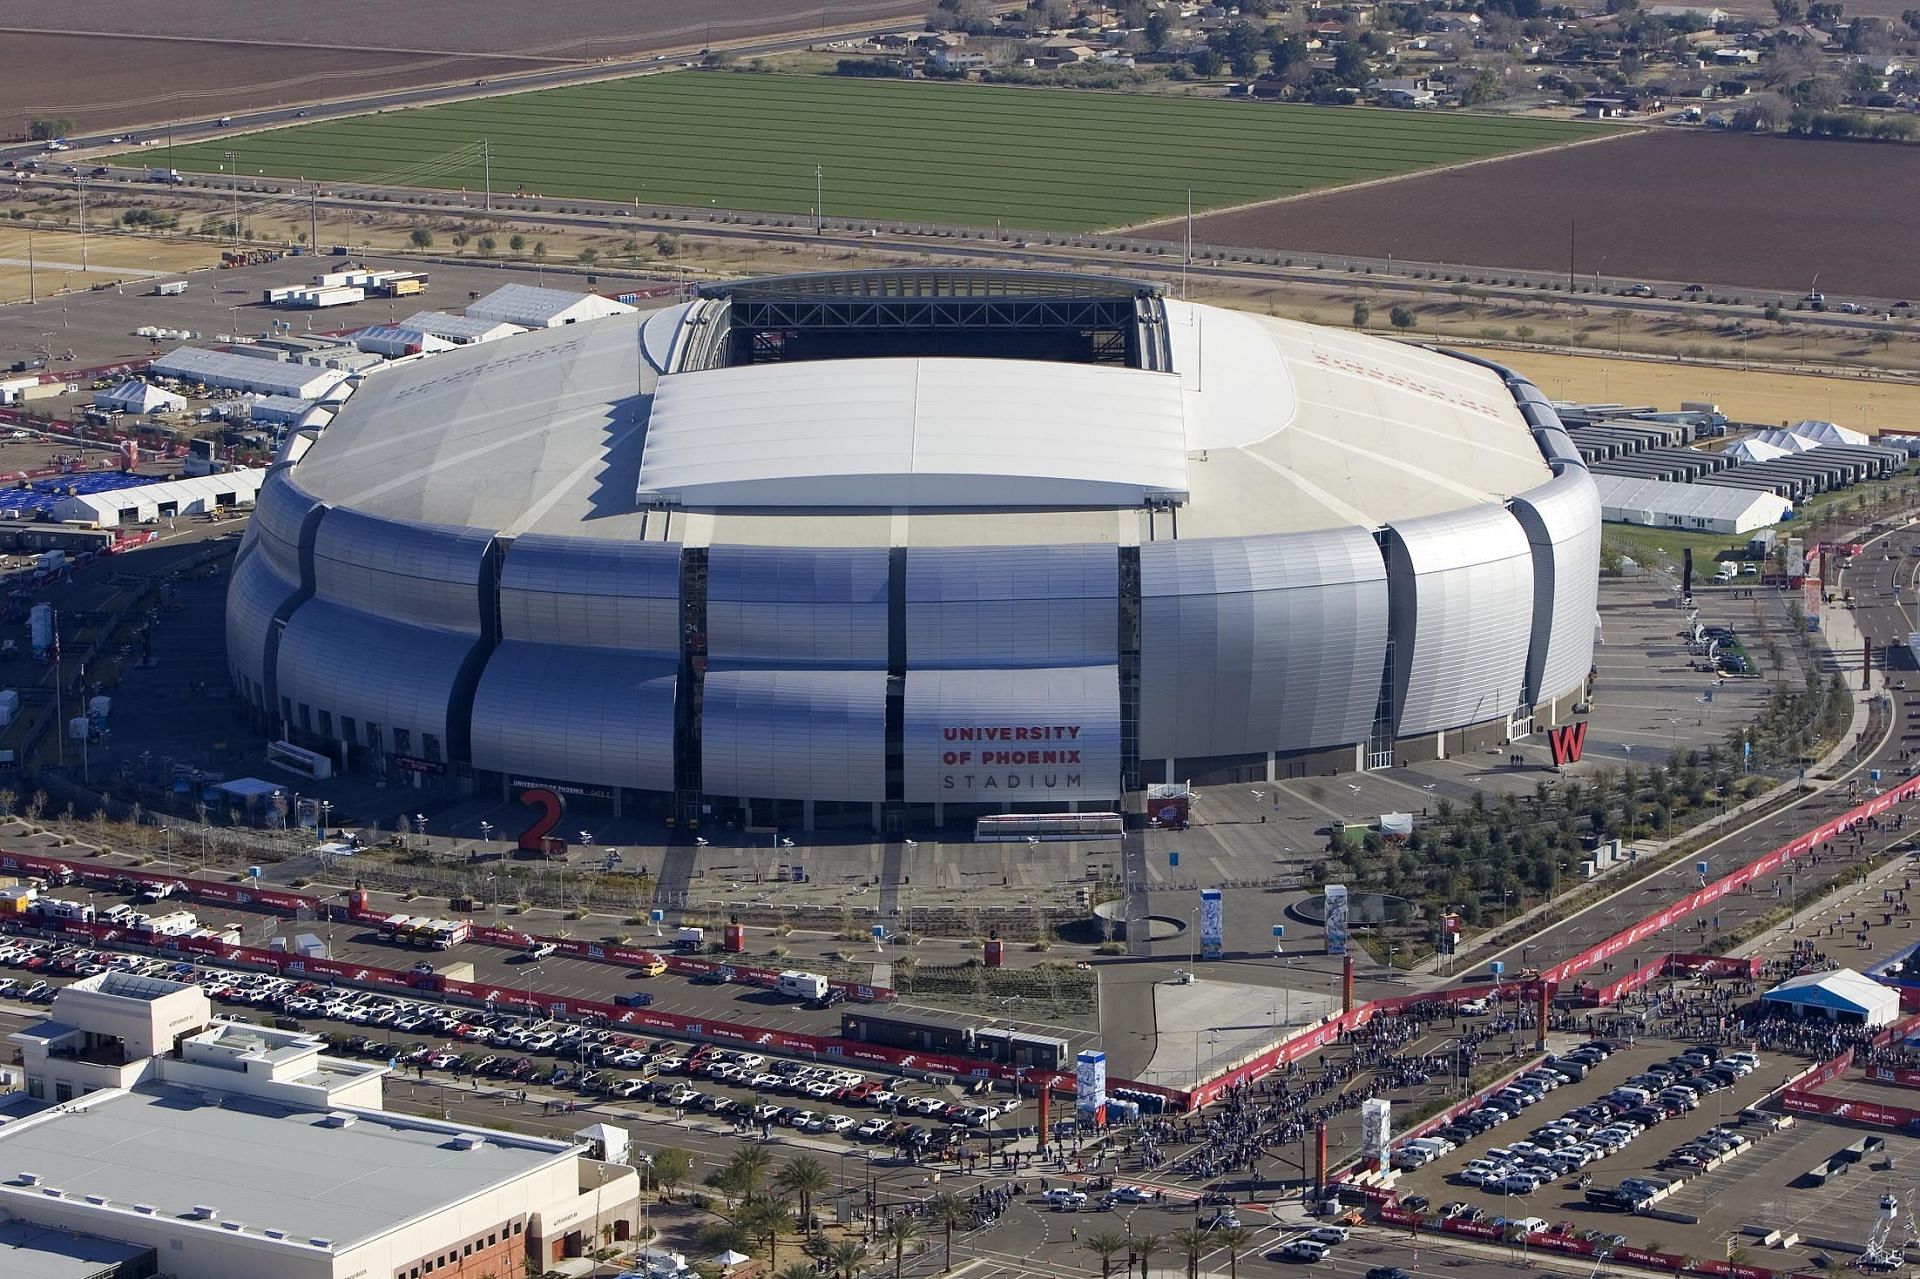 Super Bowl 2023 will take place at State Farm Stadium in Arizona